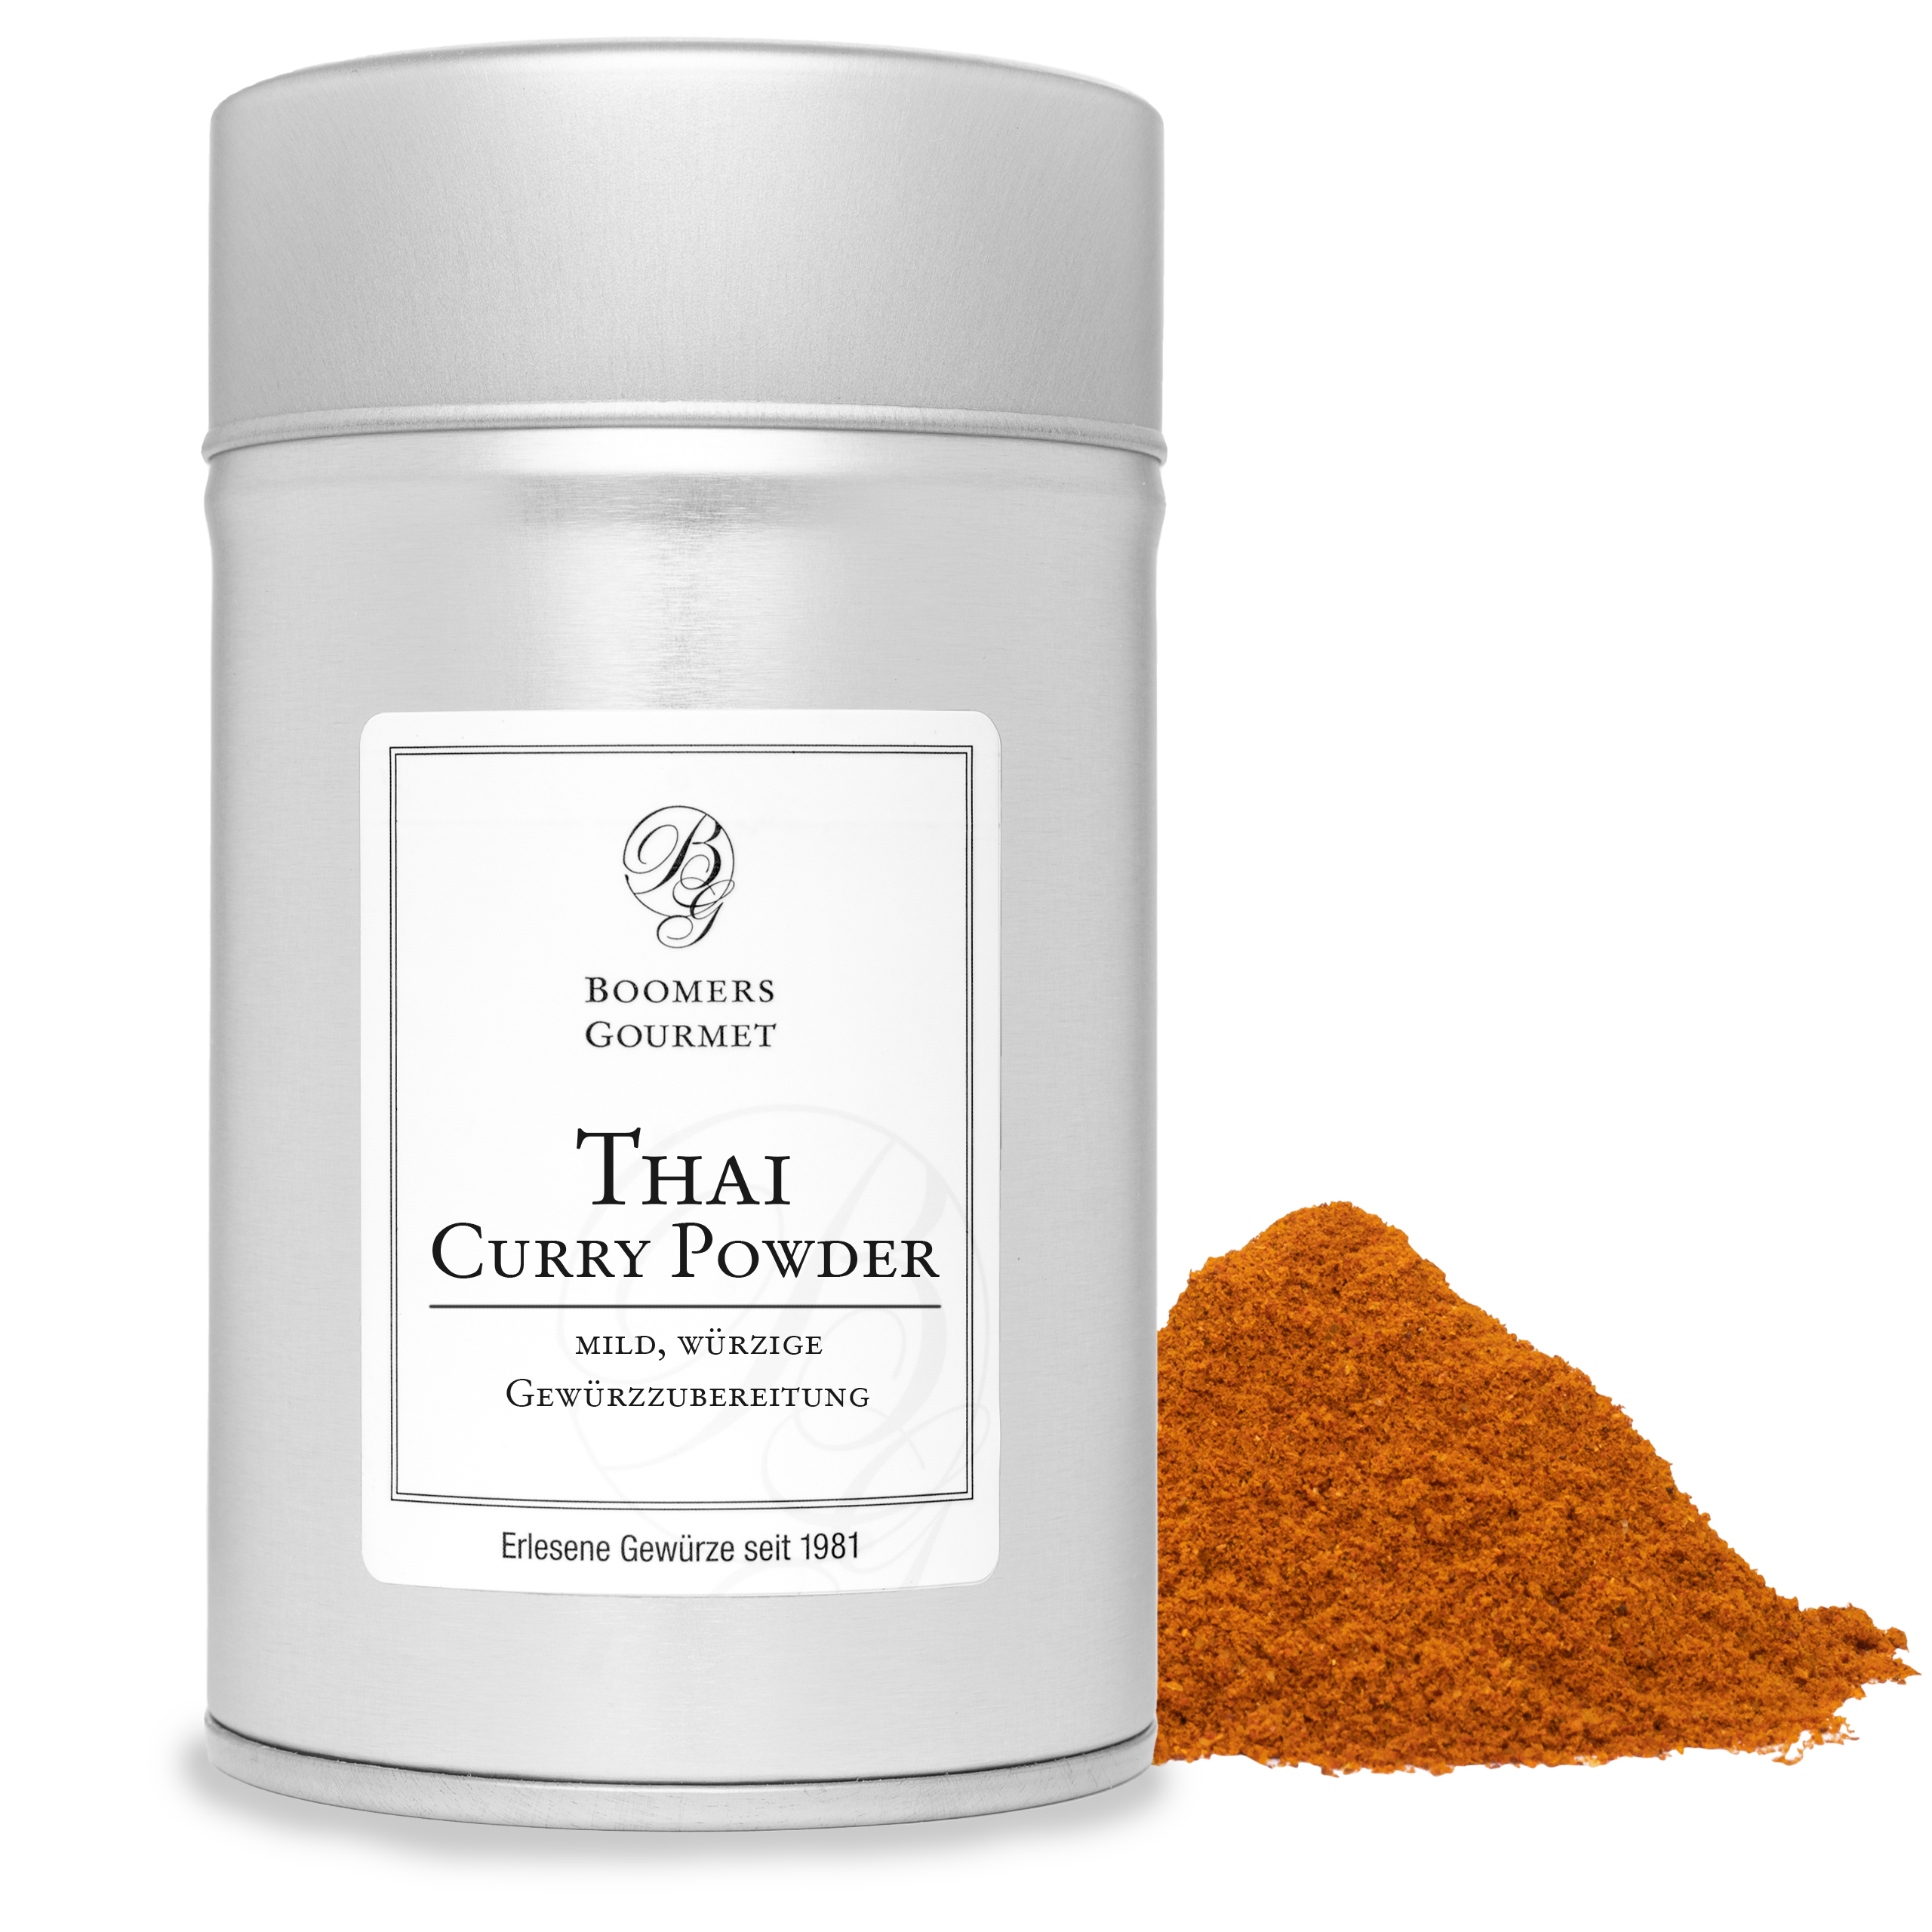 Thai Curry Powder, mild, würzige Gewürzmischung